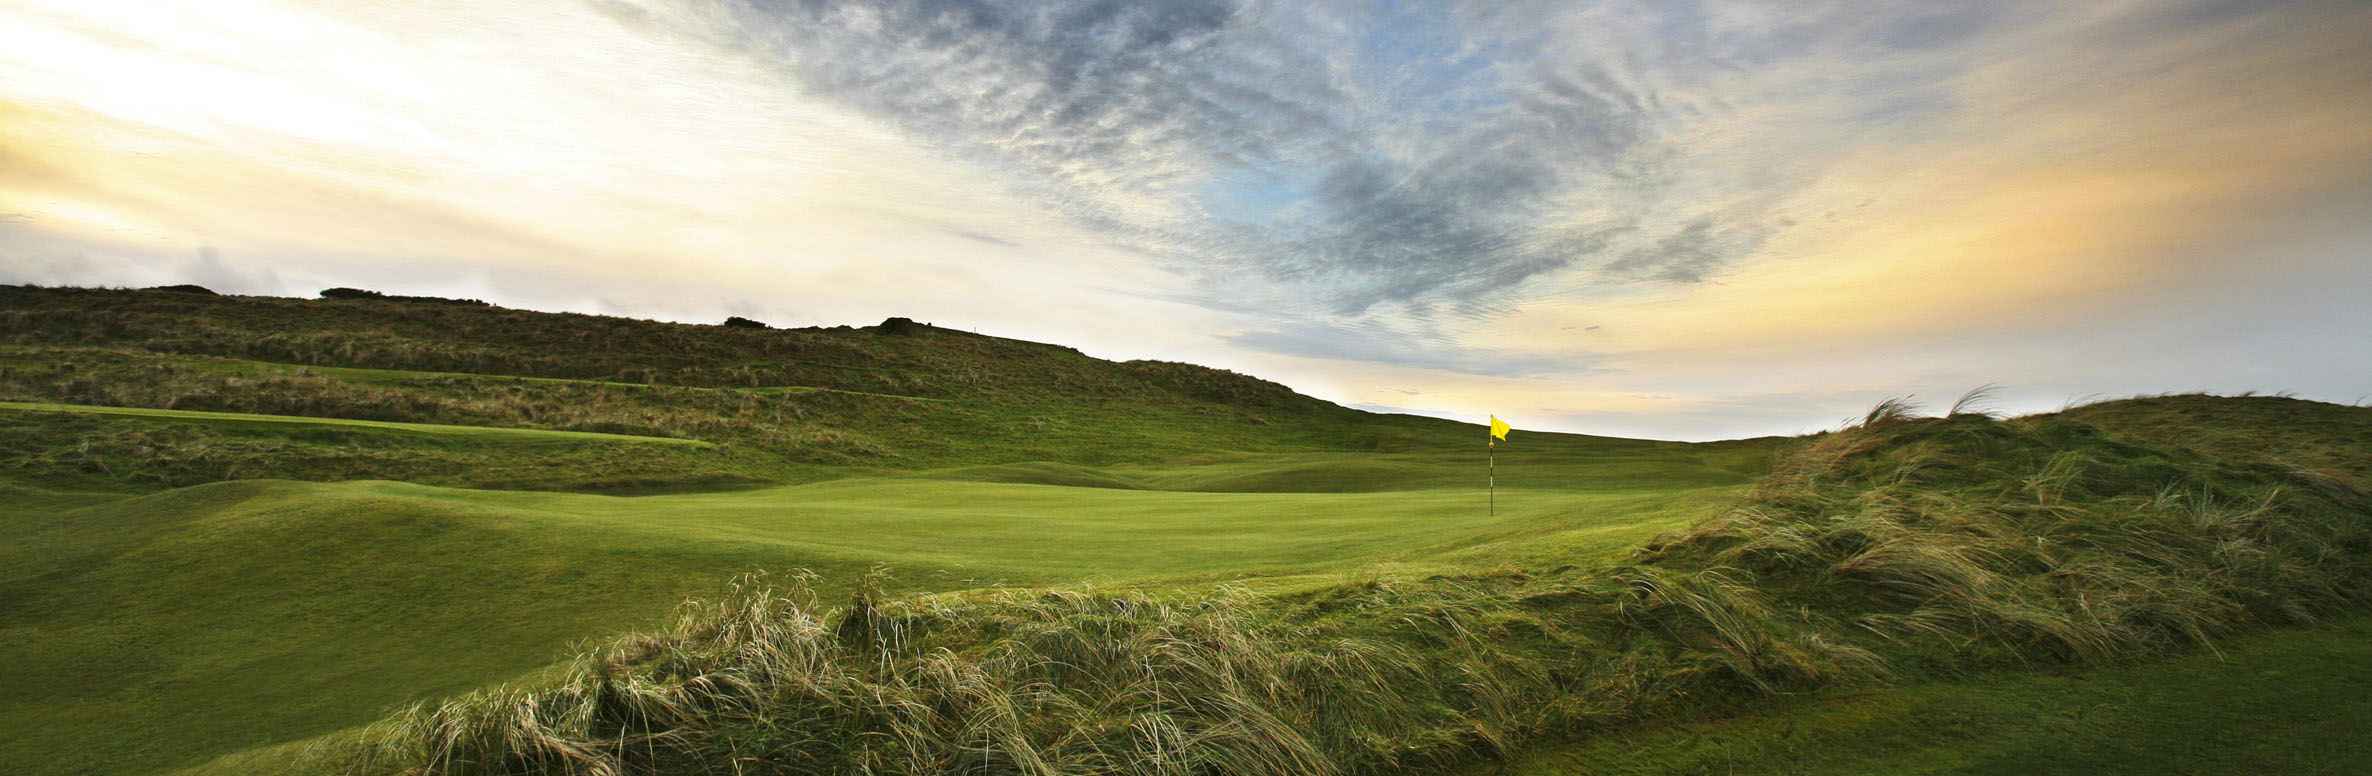 Golf Course Image - Castlerock Mussenden Course No. 10